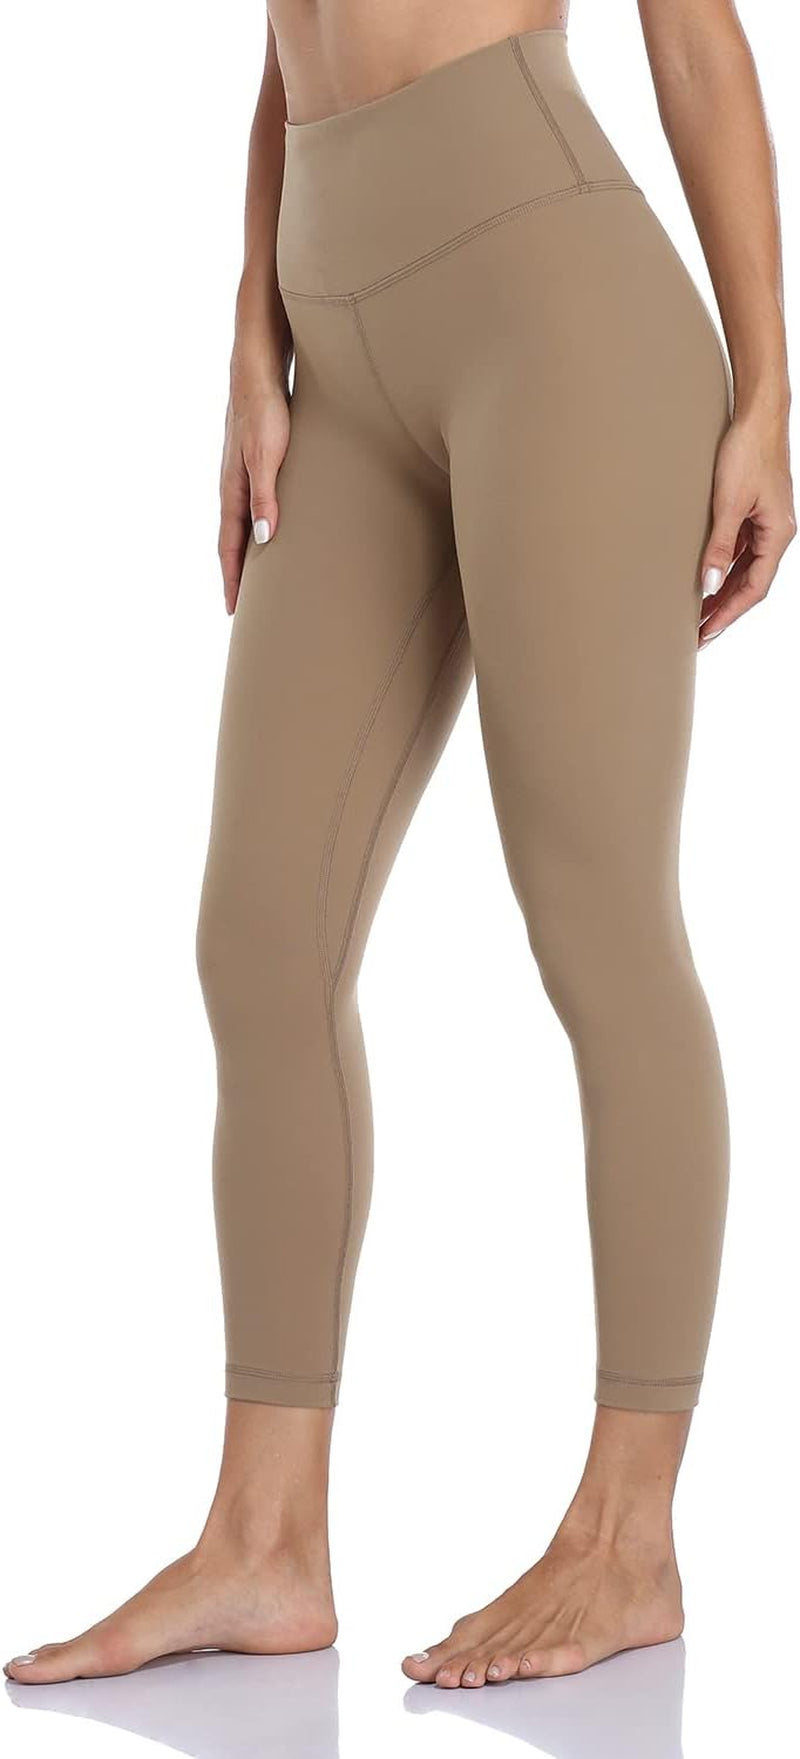 Essential/Workout Pro/Yoga Pro 7/8 Leggings, High Waisted Pants Athletic Yoga Pants 25''